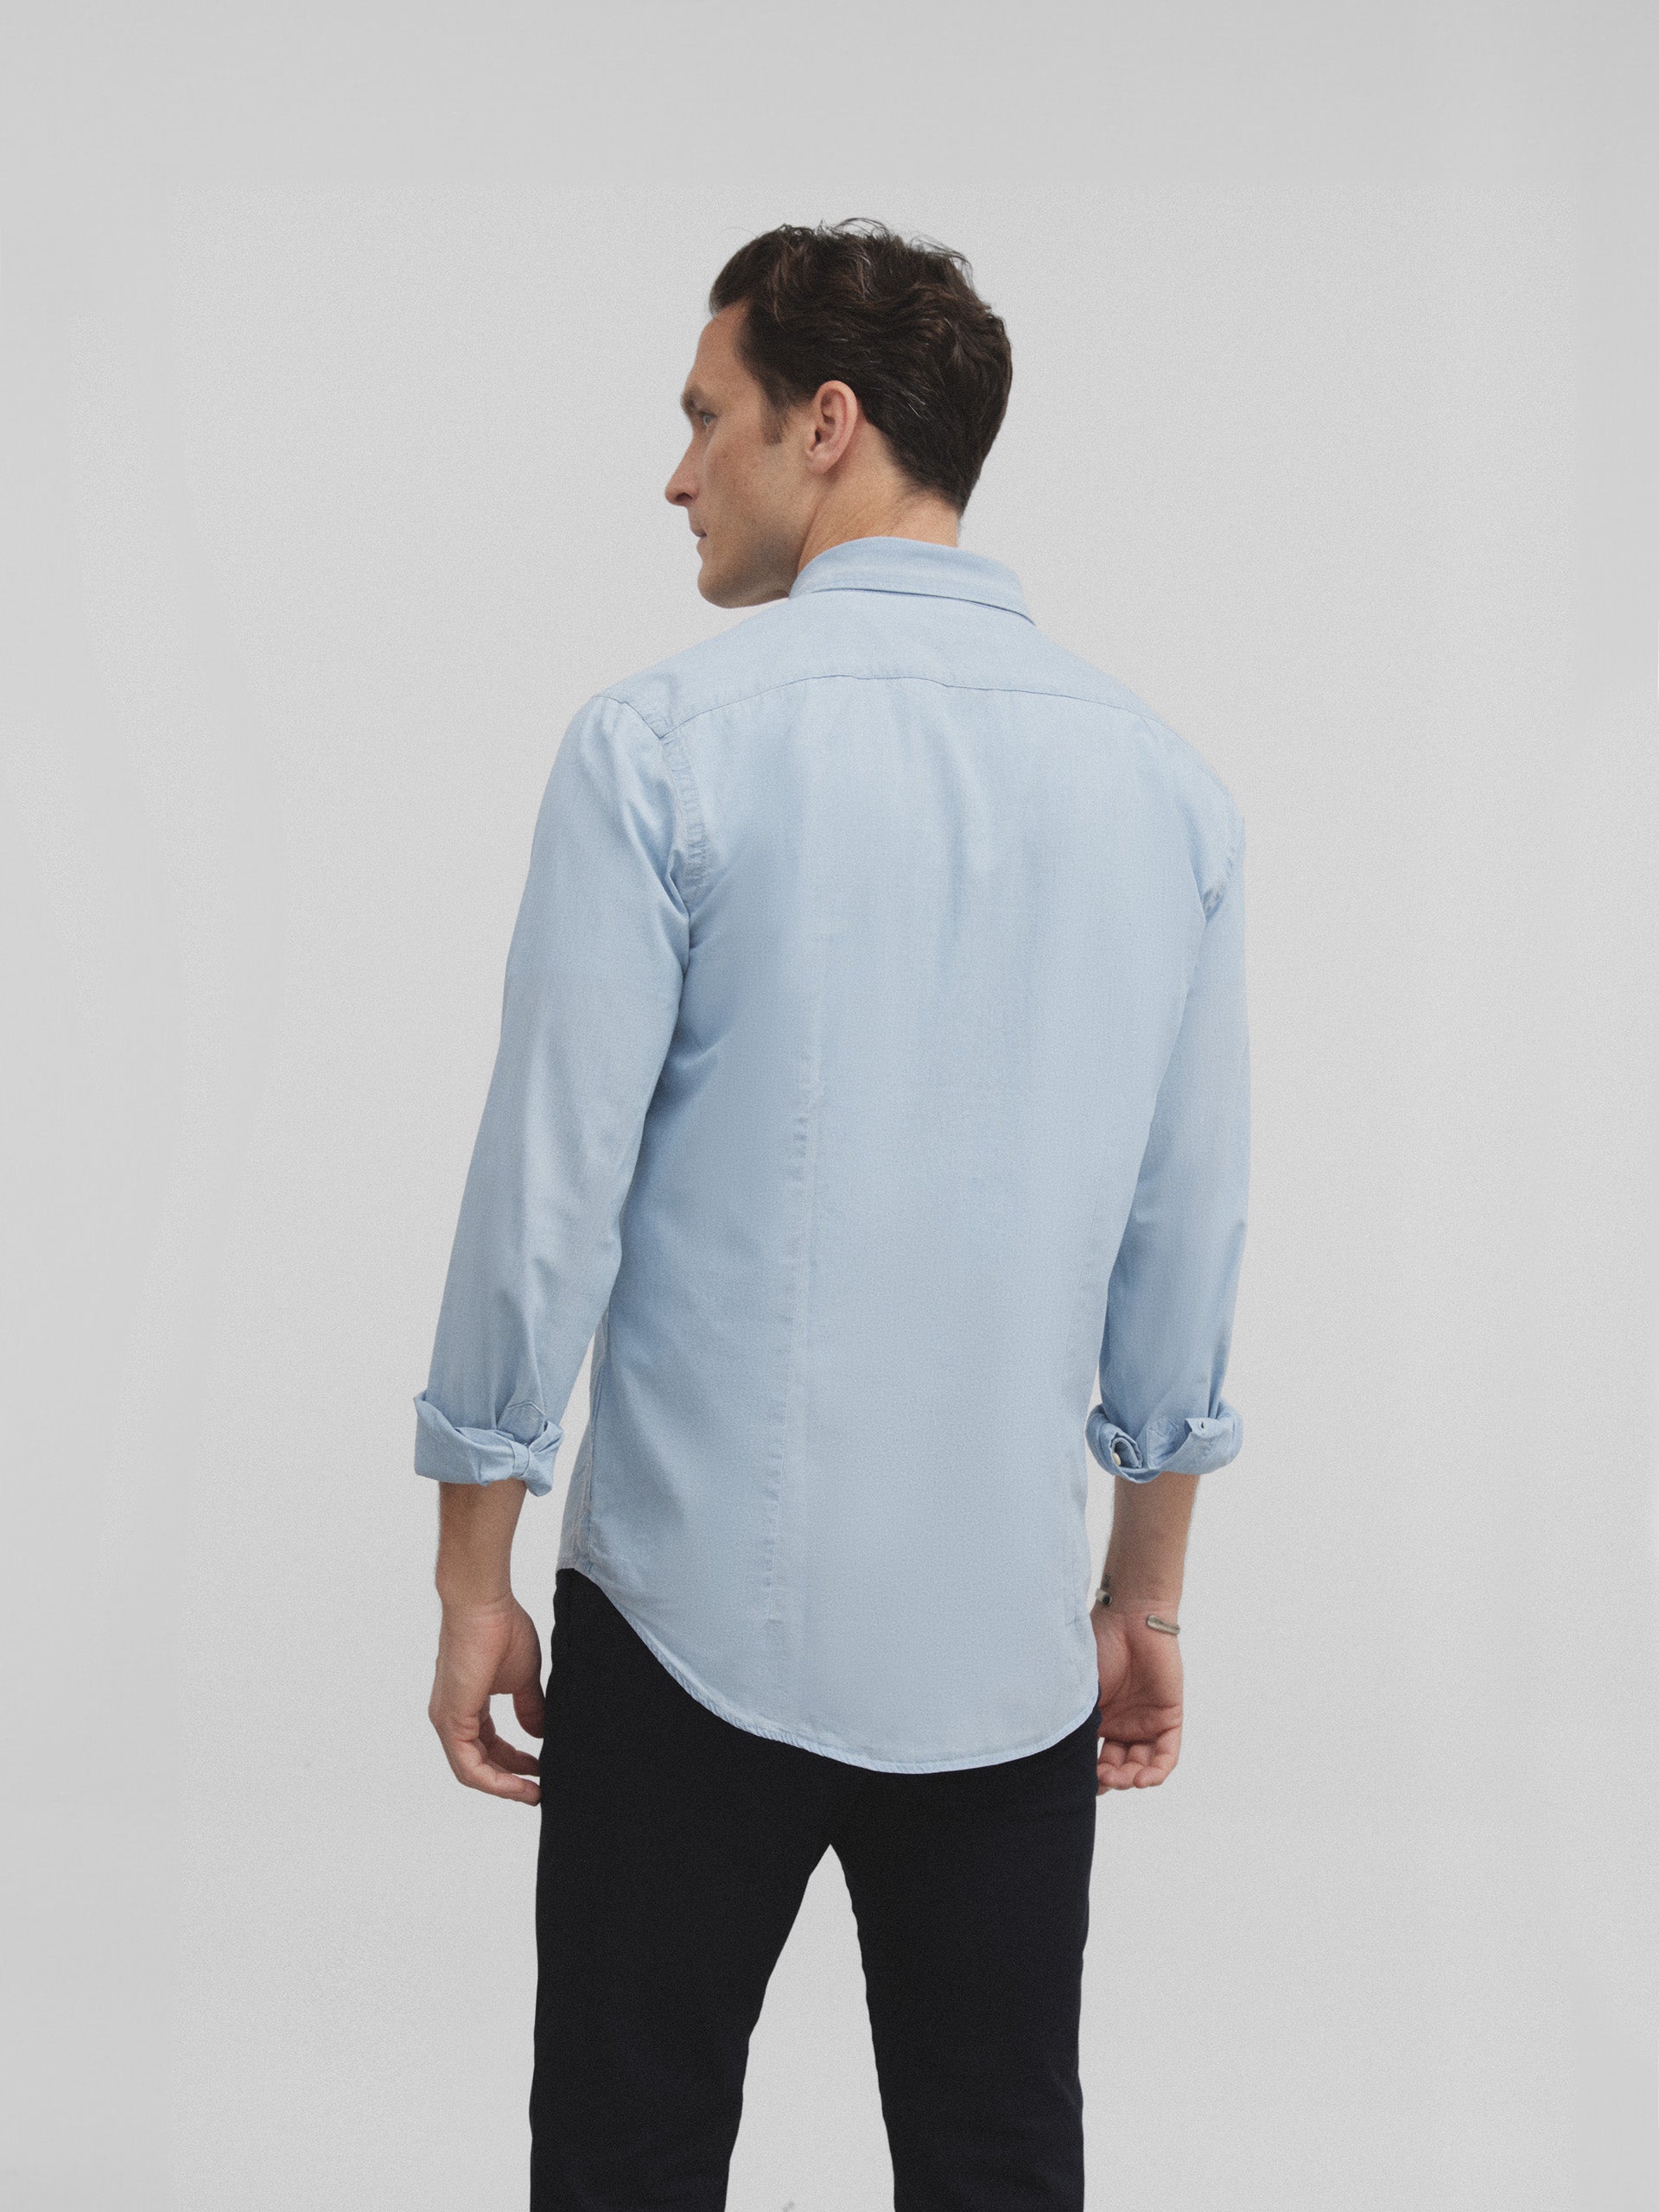 Denim sport shirt with light blue pockets